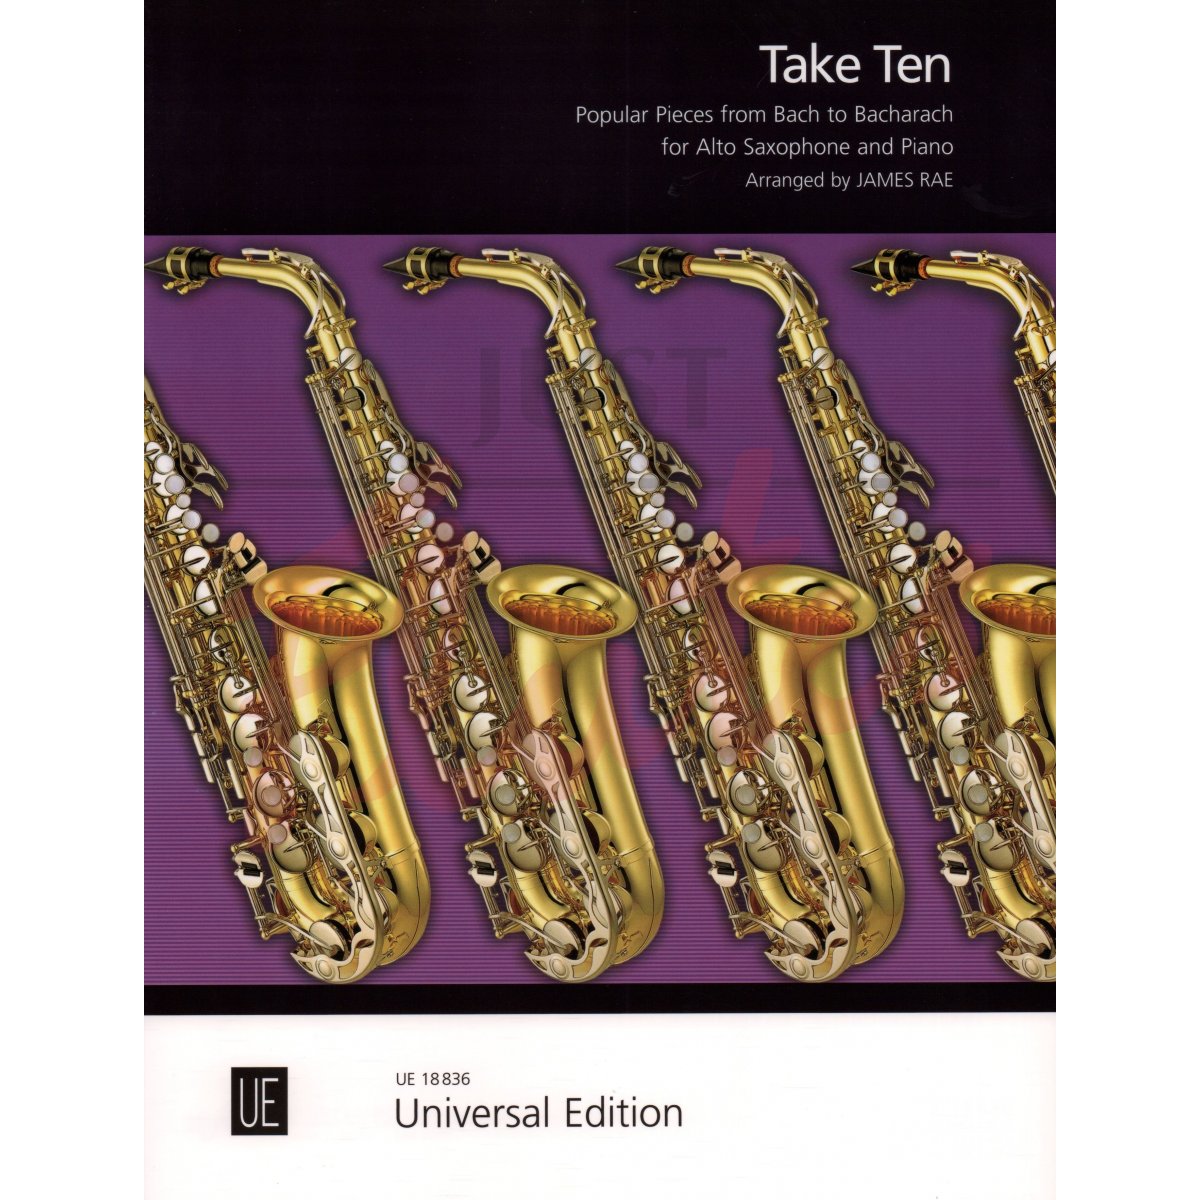 Take Ten for Alto Saxophone and Piano